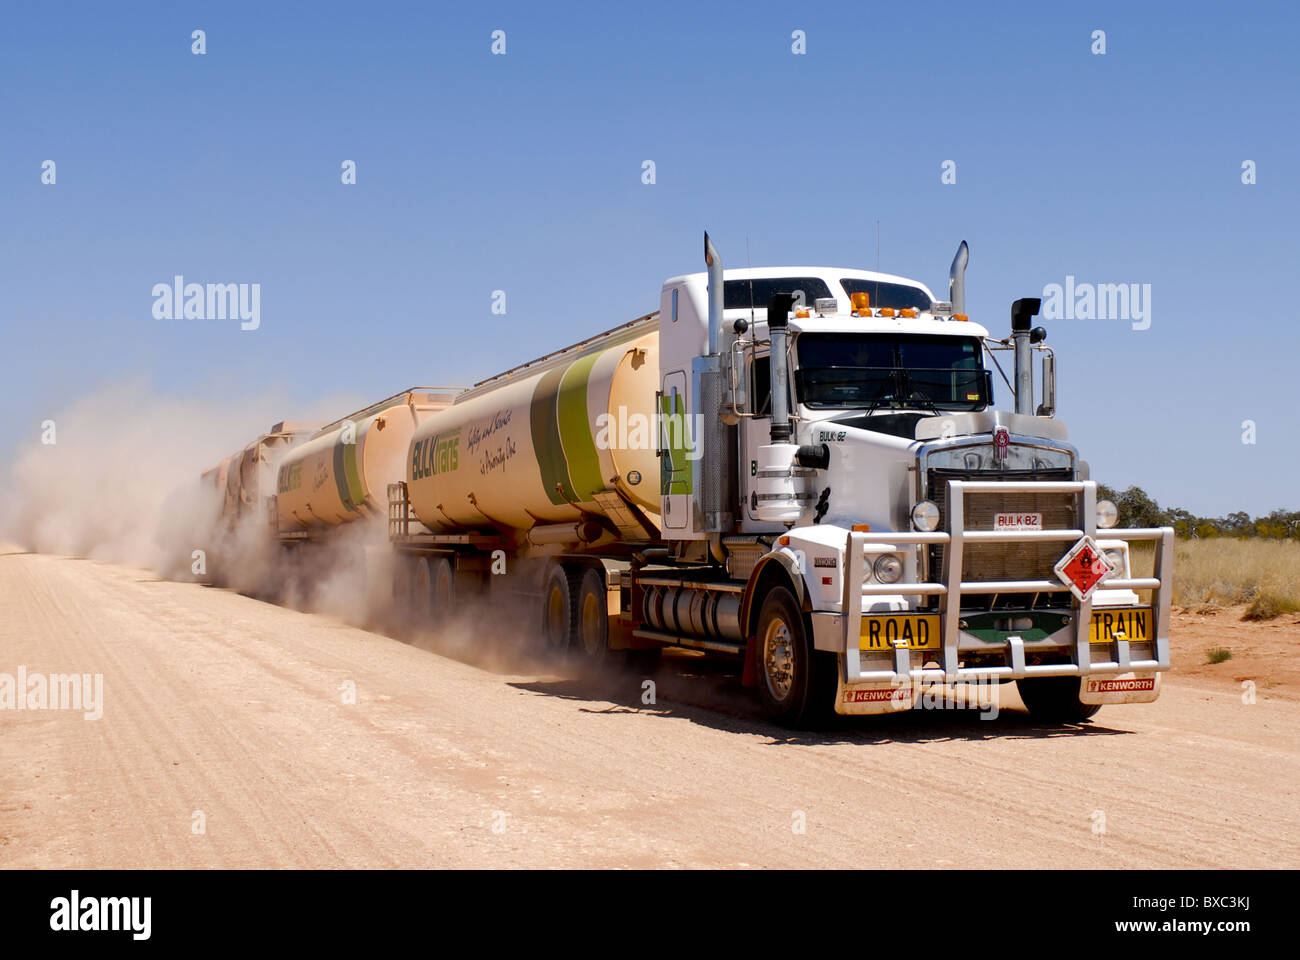 Road train in Australia Stock Photo